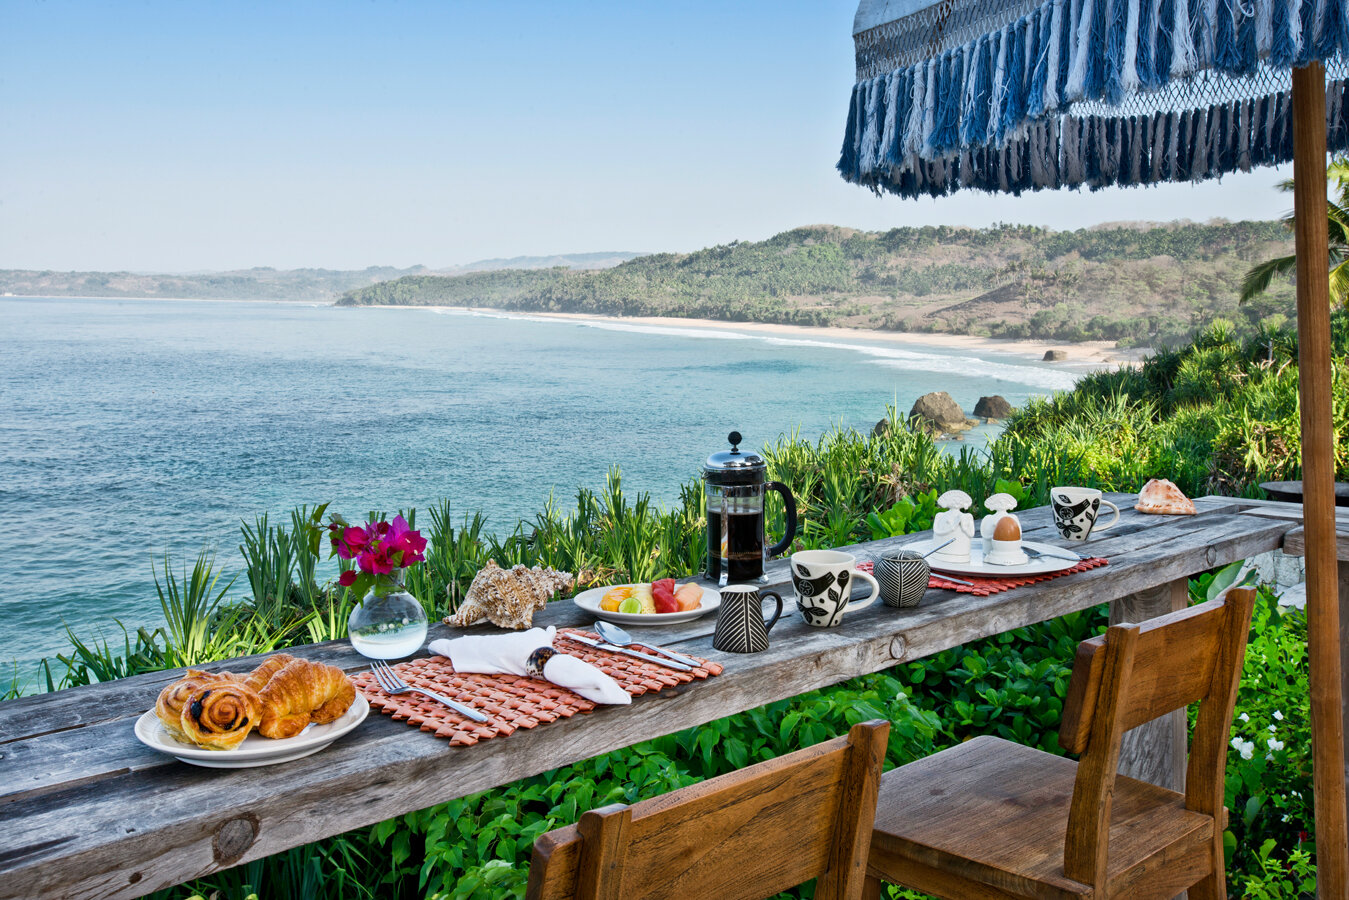 RS63_Ombak restaurant - breakfast with beach view 2.jpg